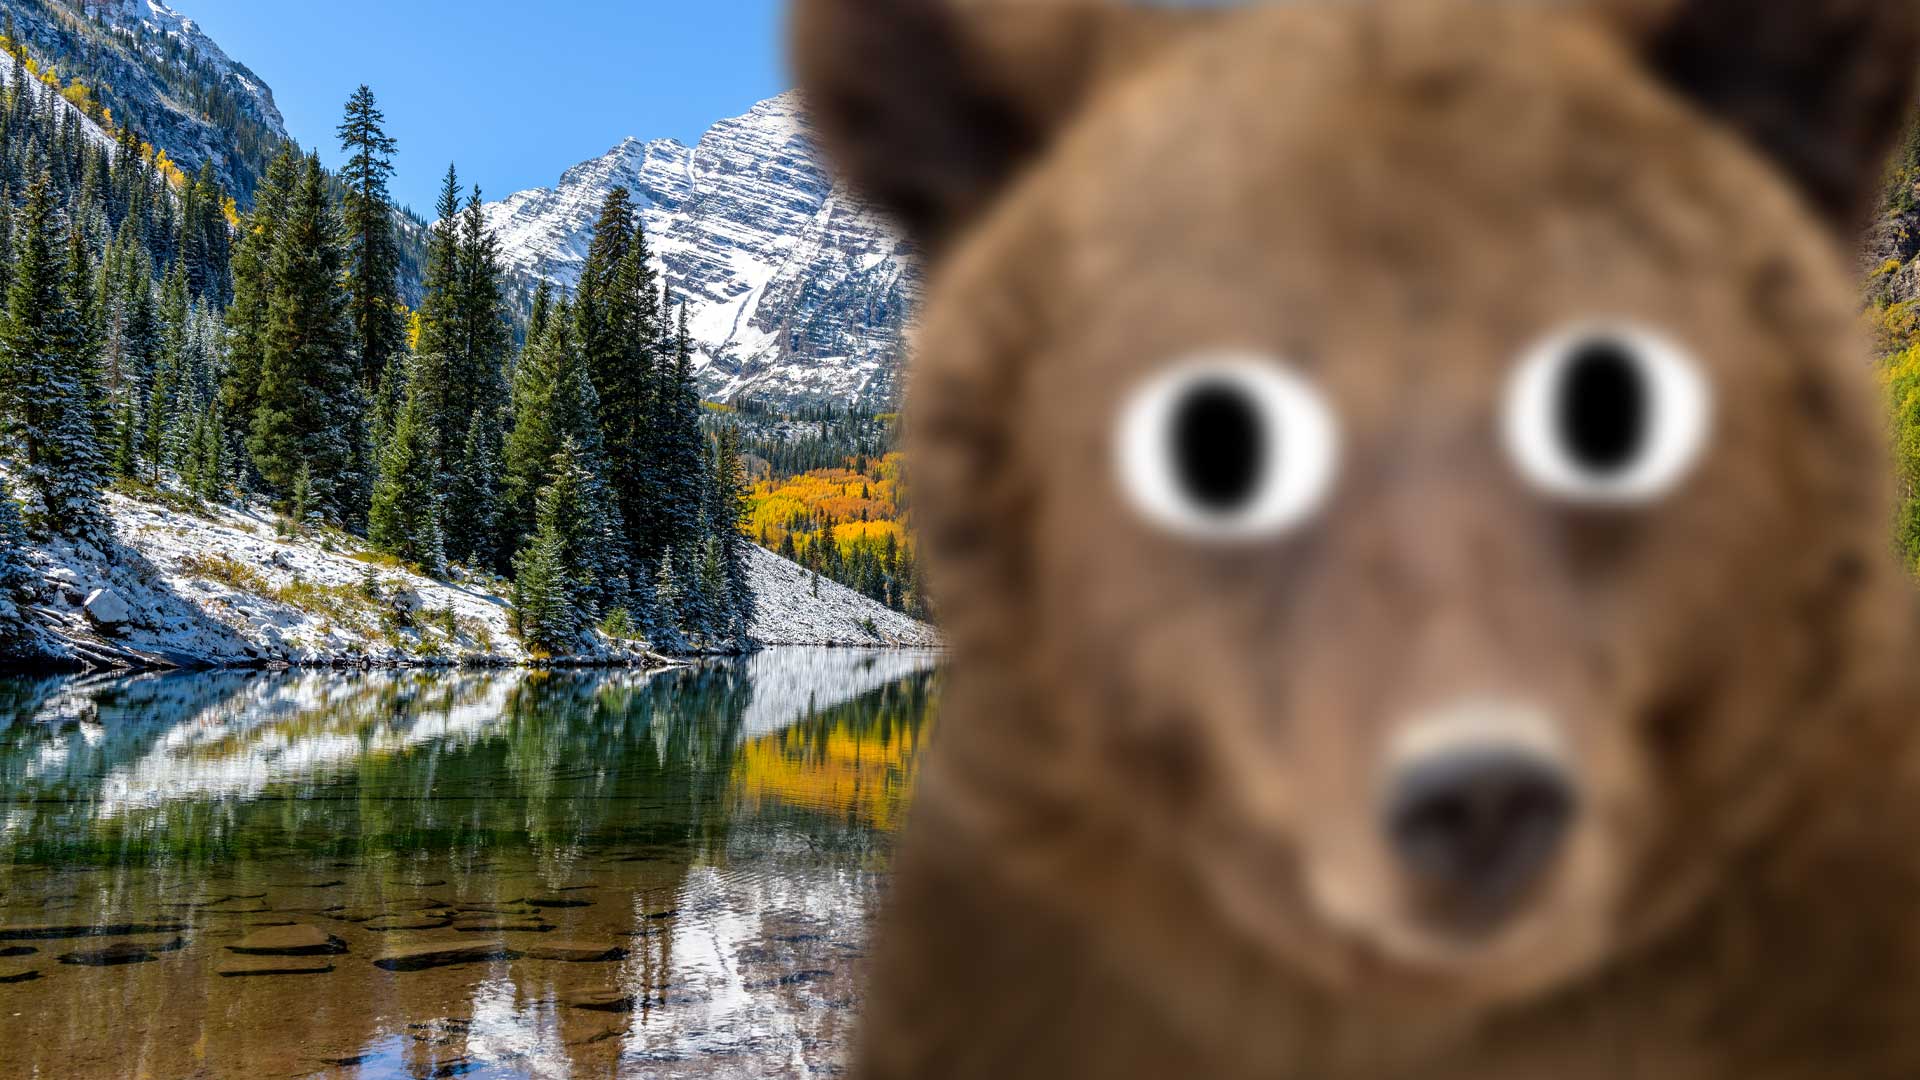 A blurred bear in Colorado